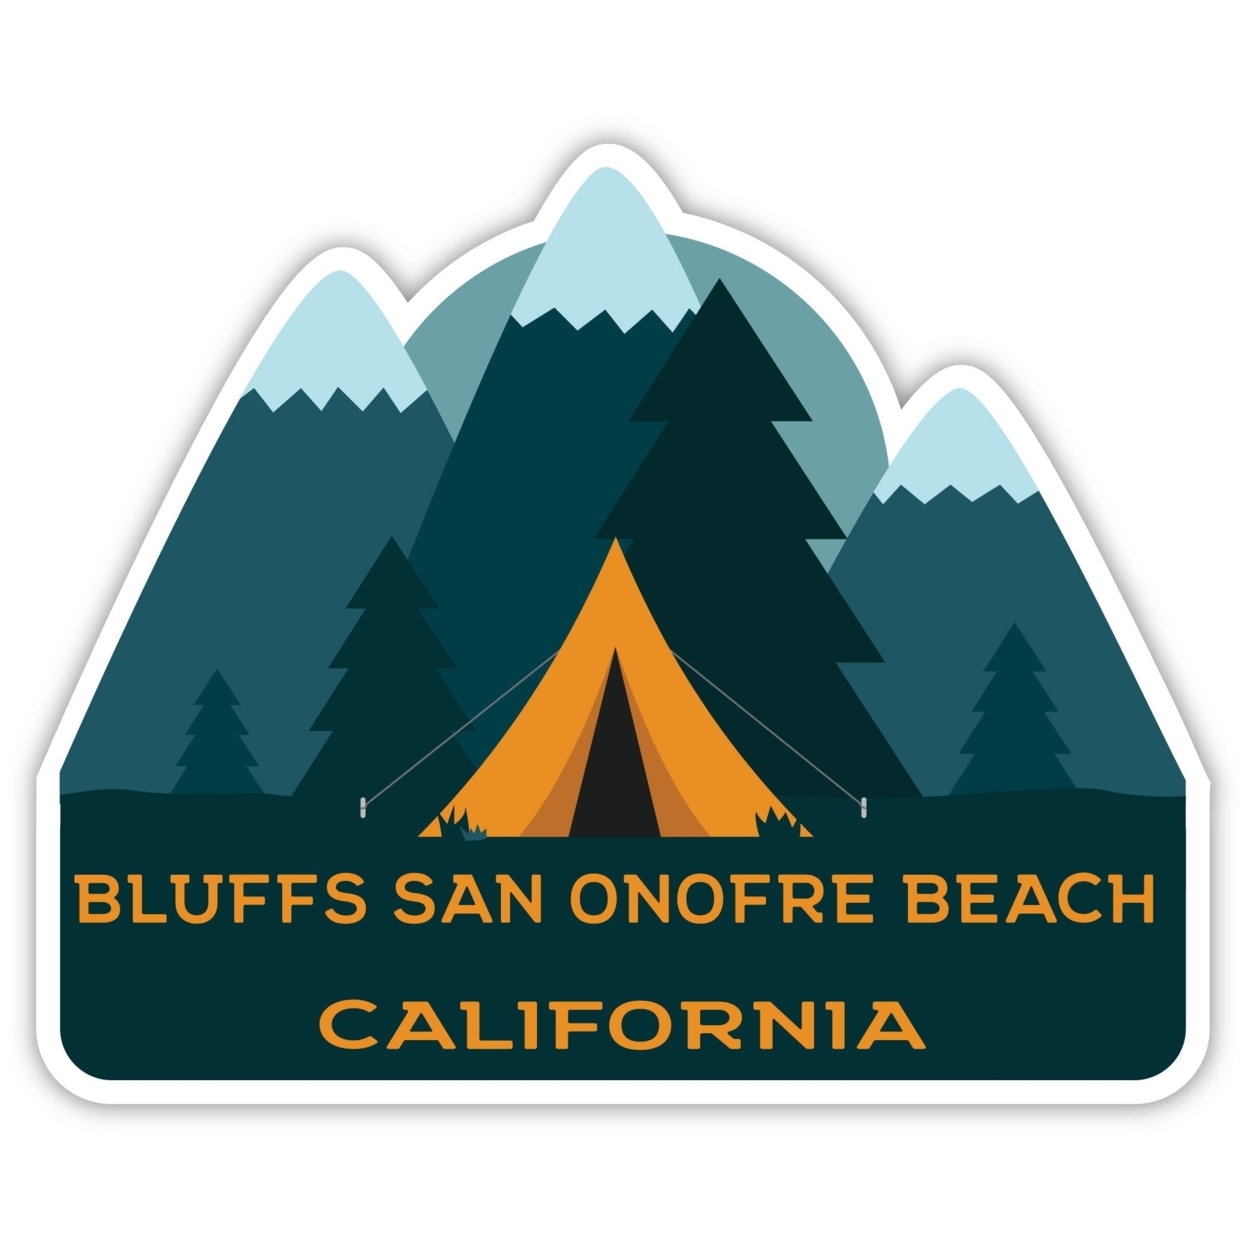 Bluffs San Onofre Beach California Souvenir Decorative Stickers (Choose Theme And Size) - Single Unit, 12-Inch, Adventures Awaits